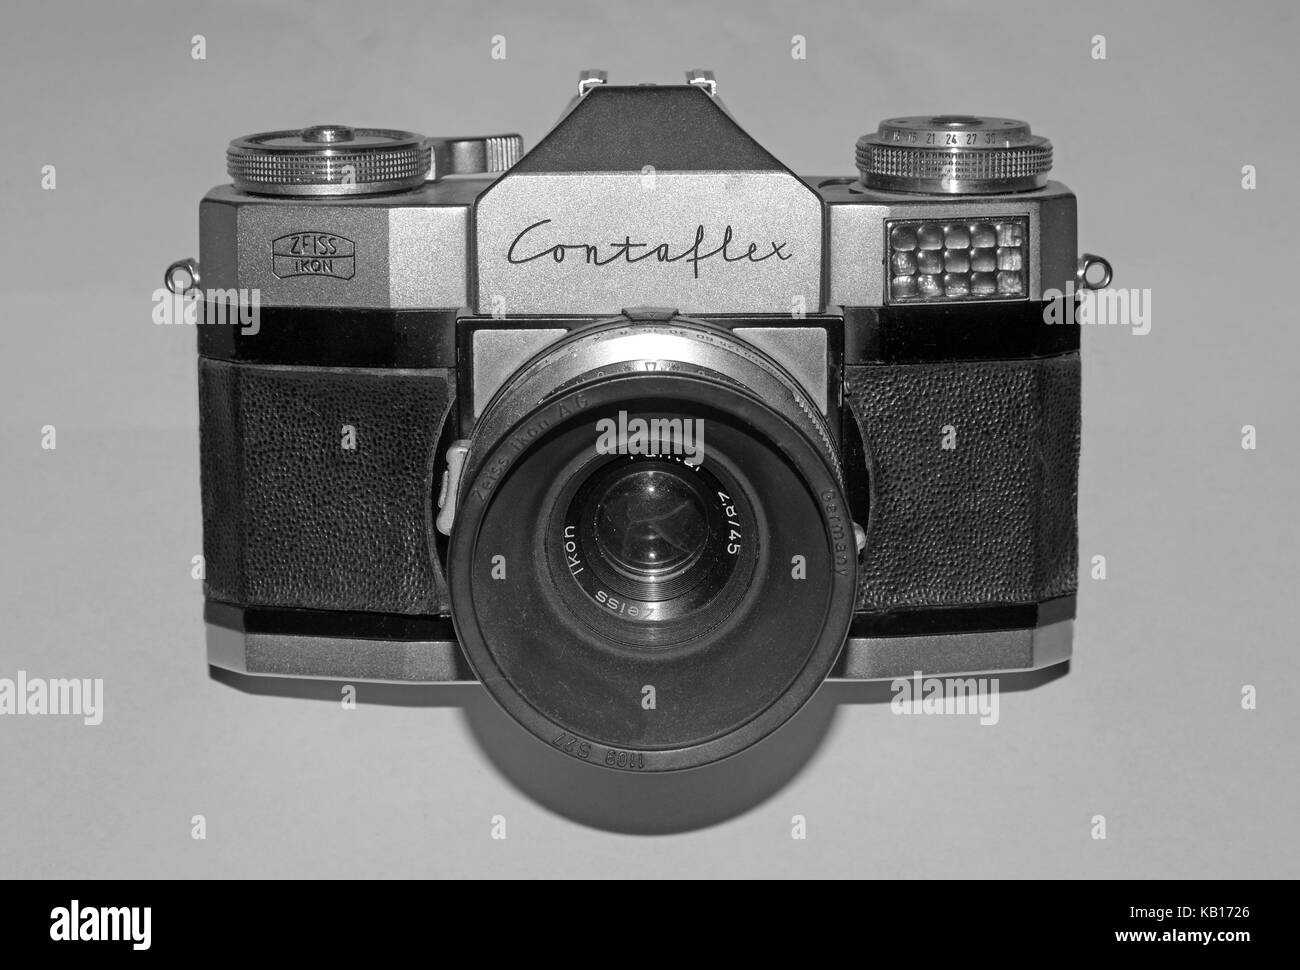 Zeiss ikon contaflex srl fotocamera close-up (1950-1960) Foto Stock